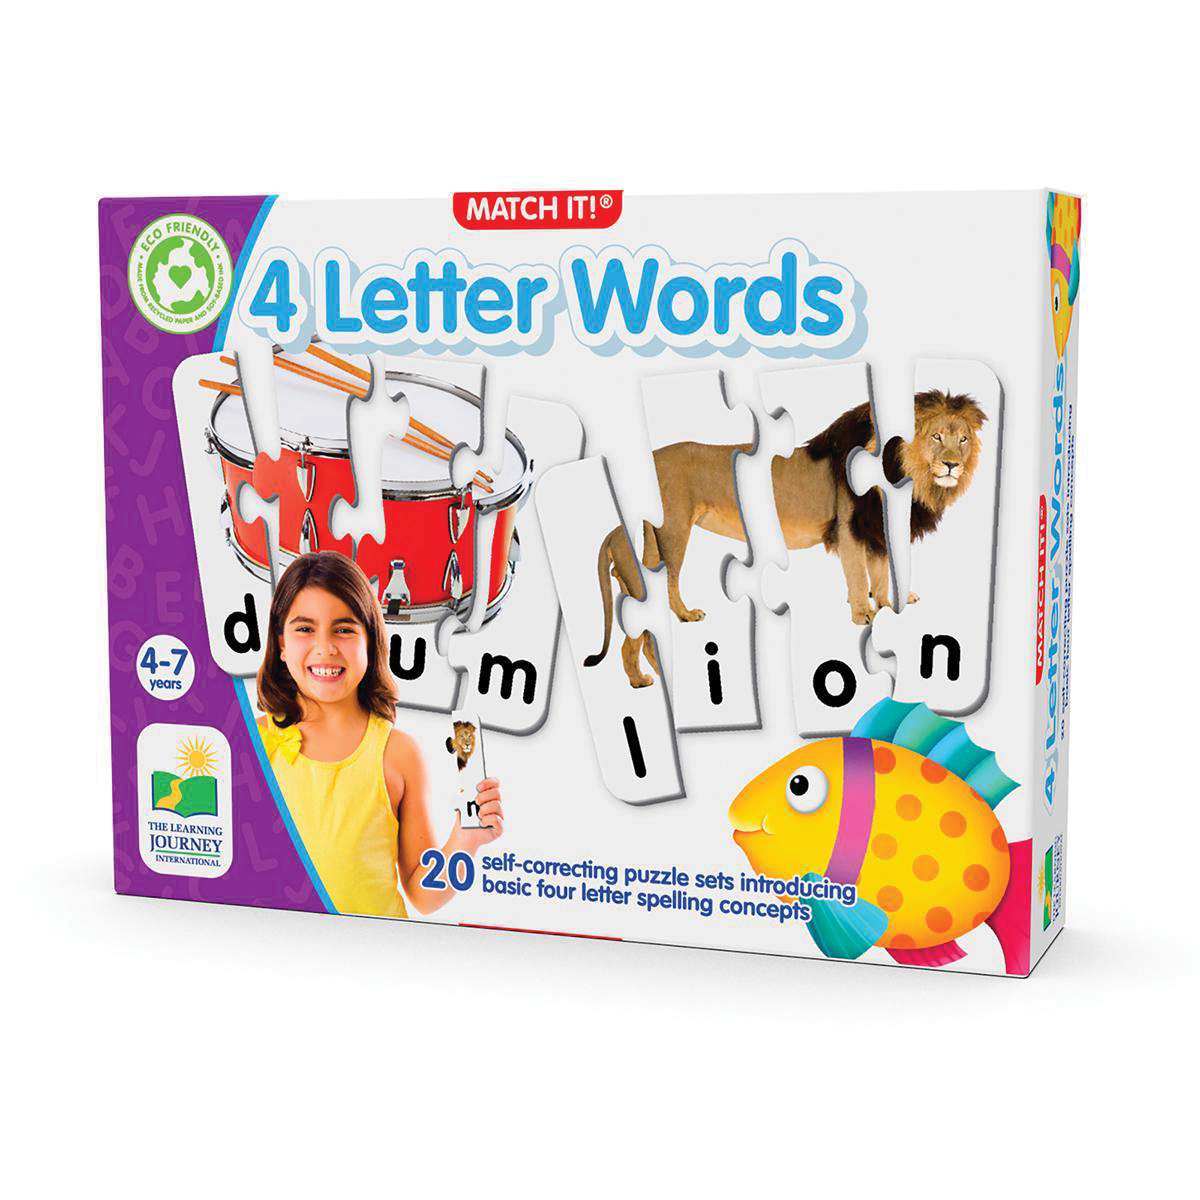  Match It! 4 Letter Words 